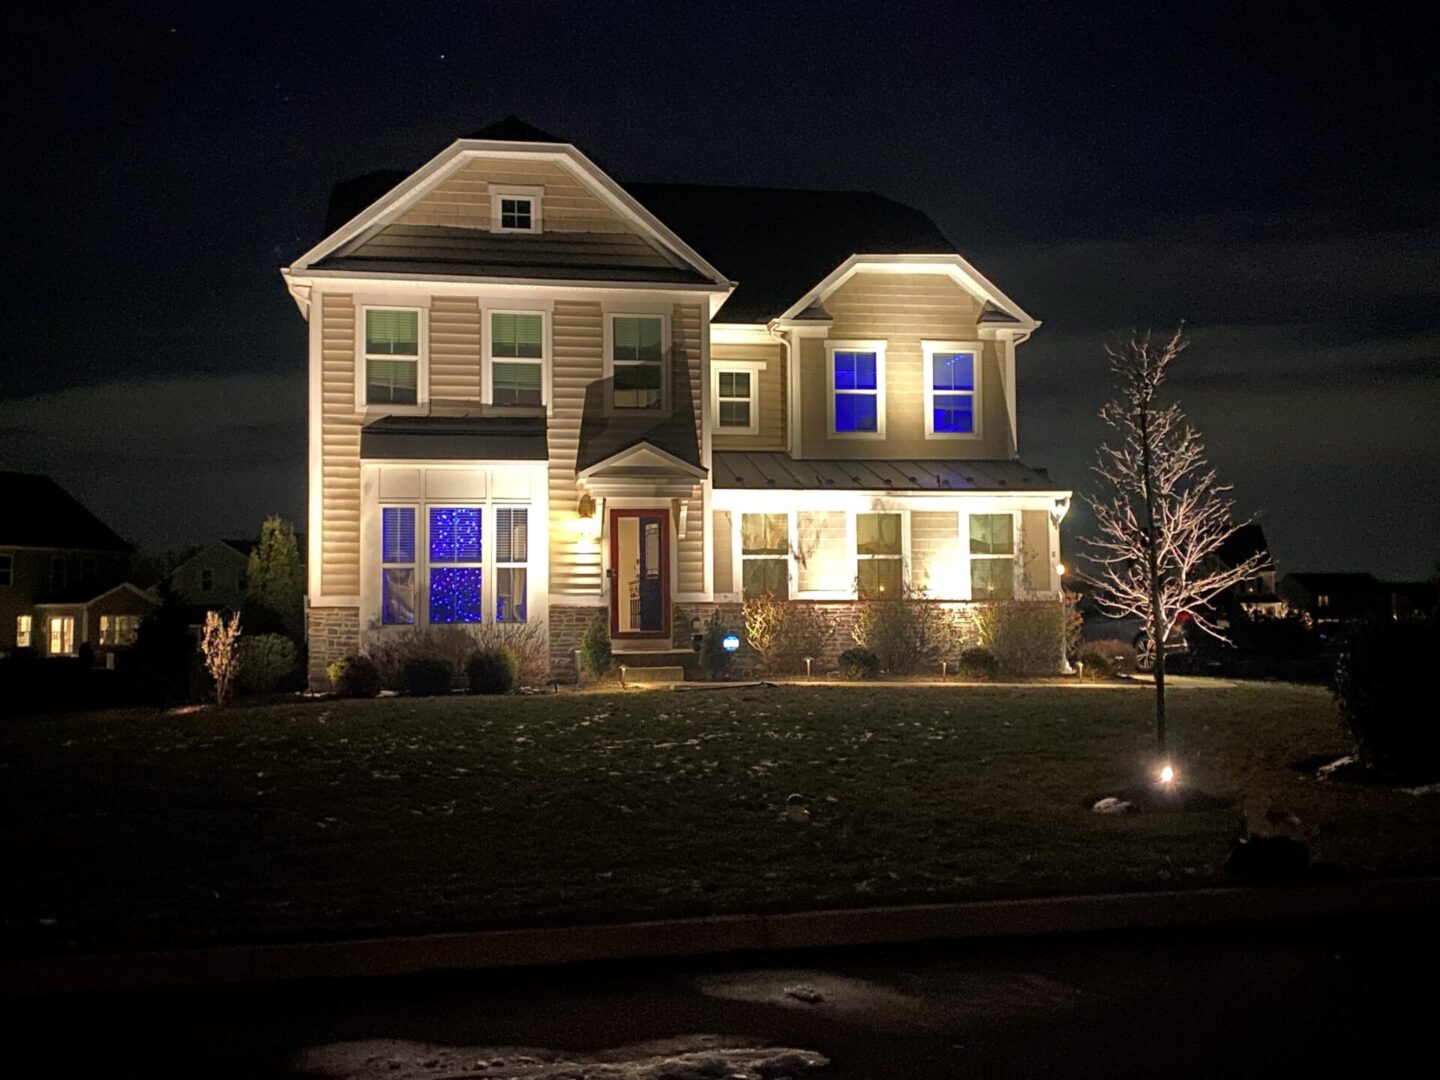 Illuminated Home with Landscape Lighting